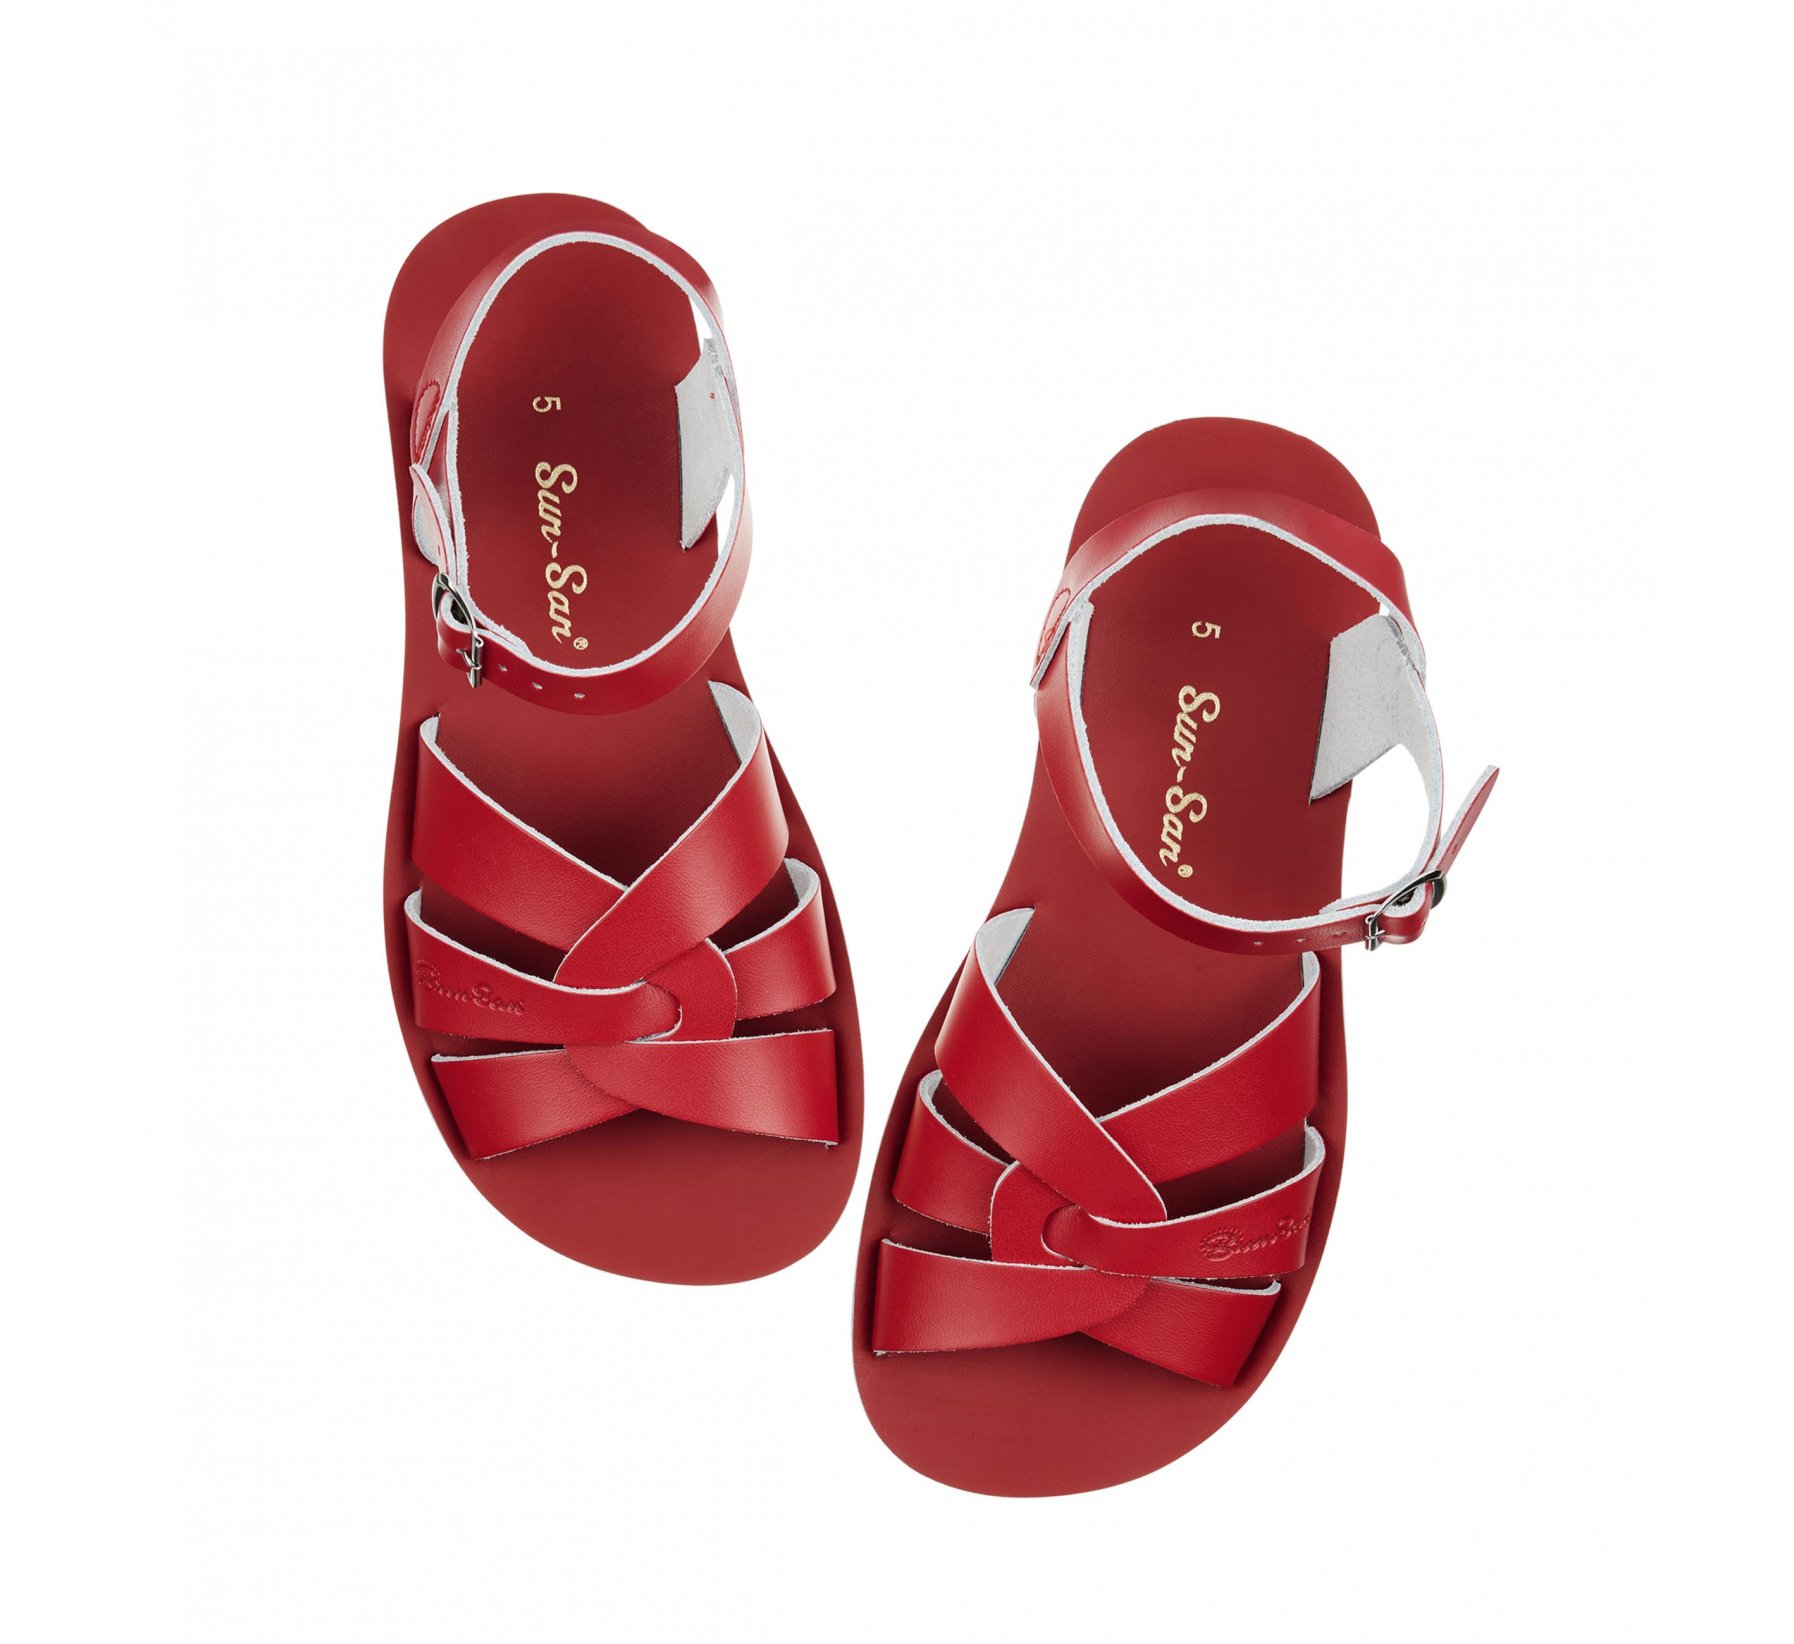 Swimmer Red Sandal - Salt Water Sandals